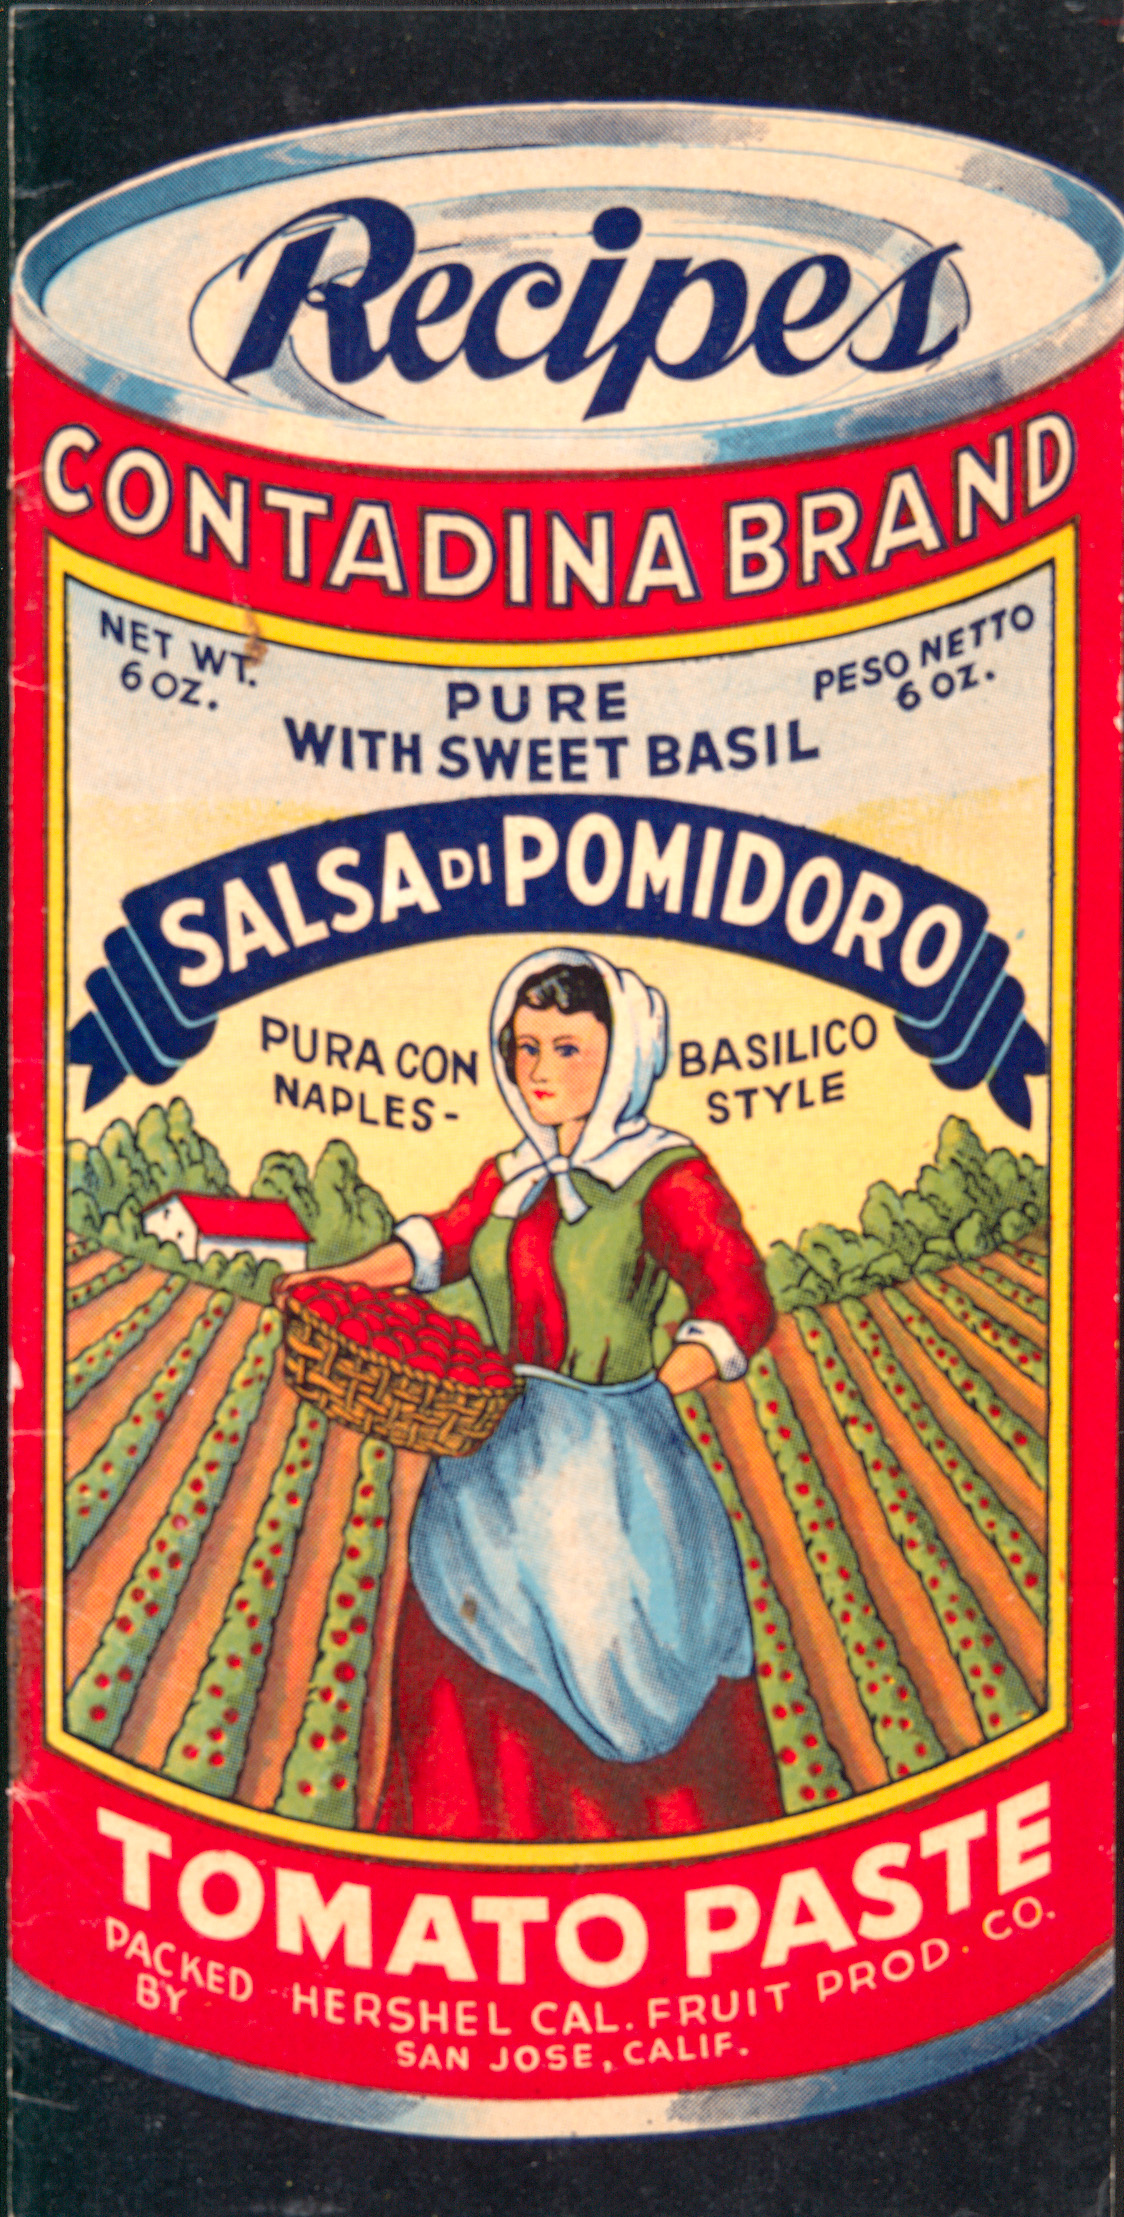 Recipes, Contadina Brand Tomato Paste